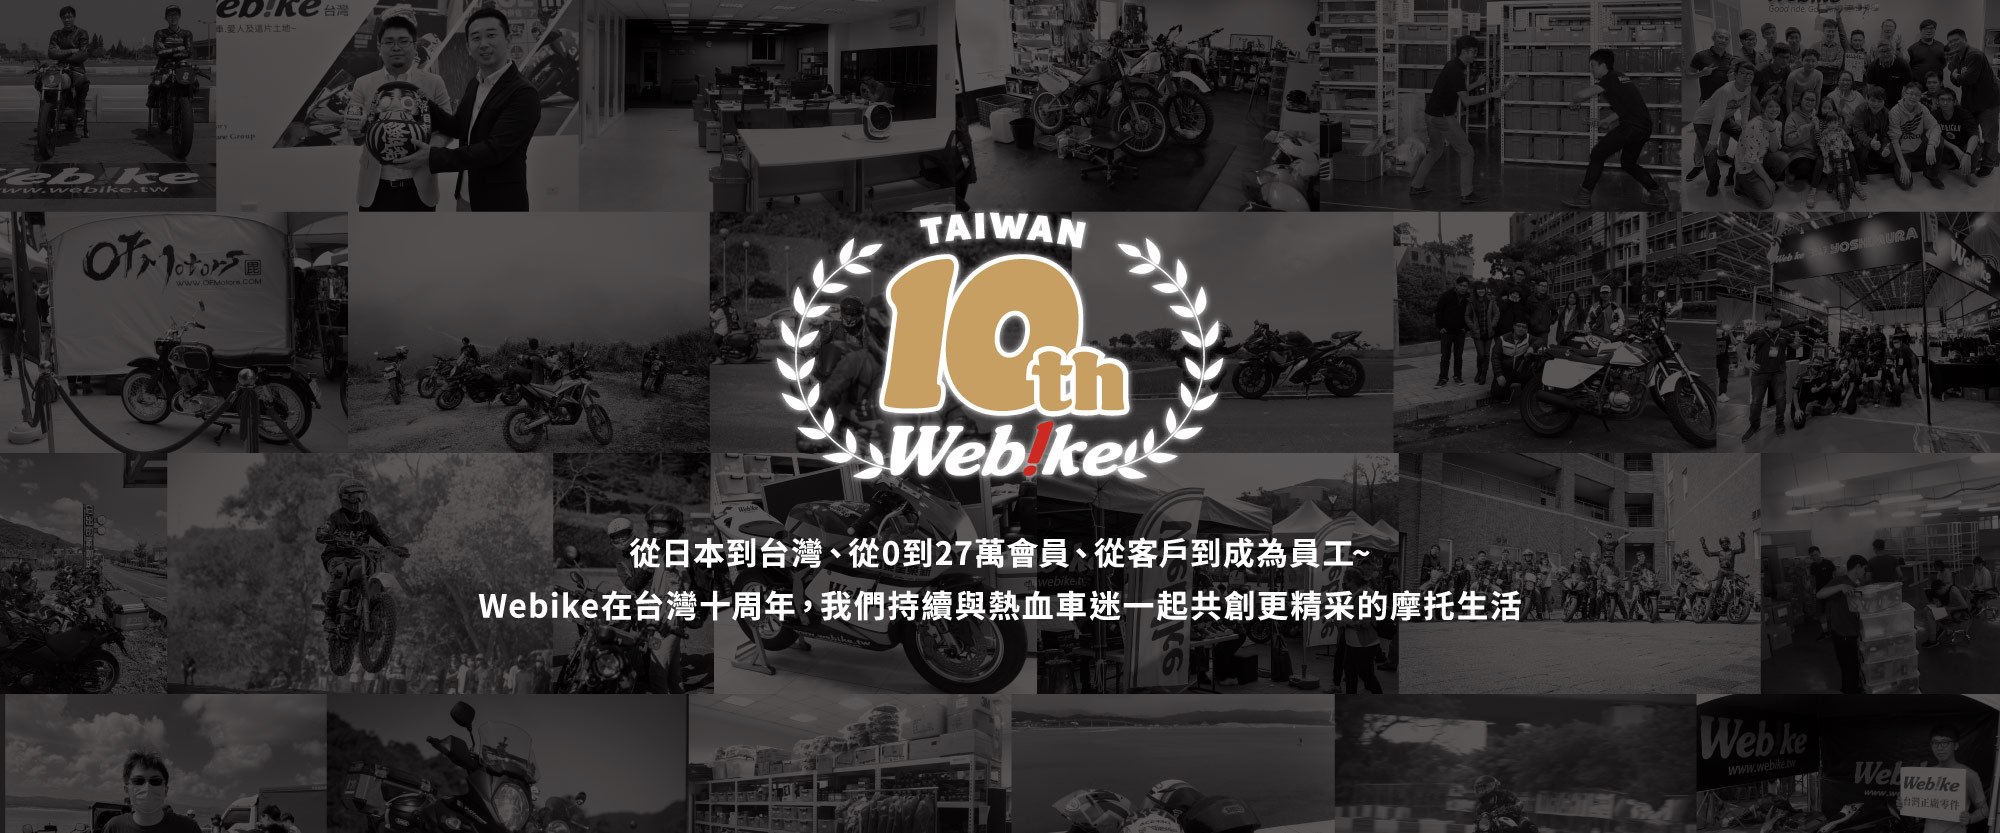 Webike台灣10周年